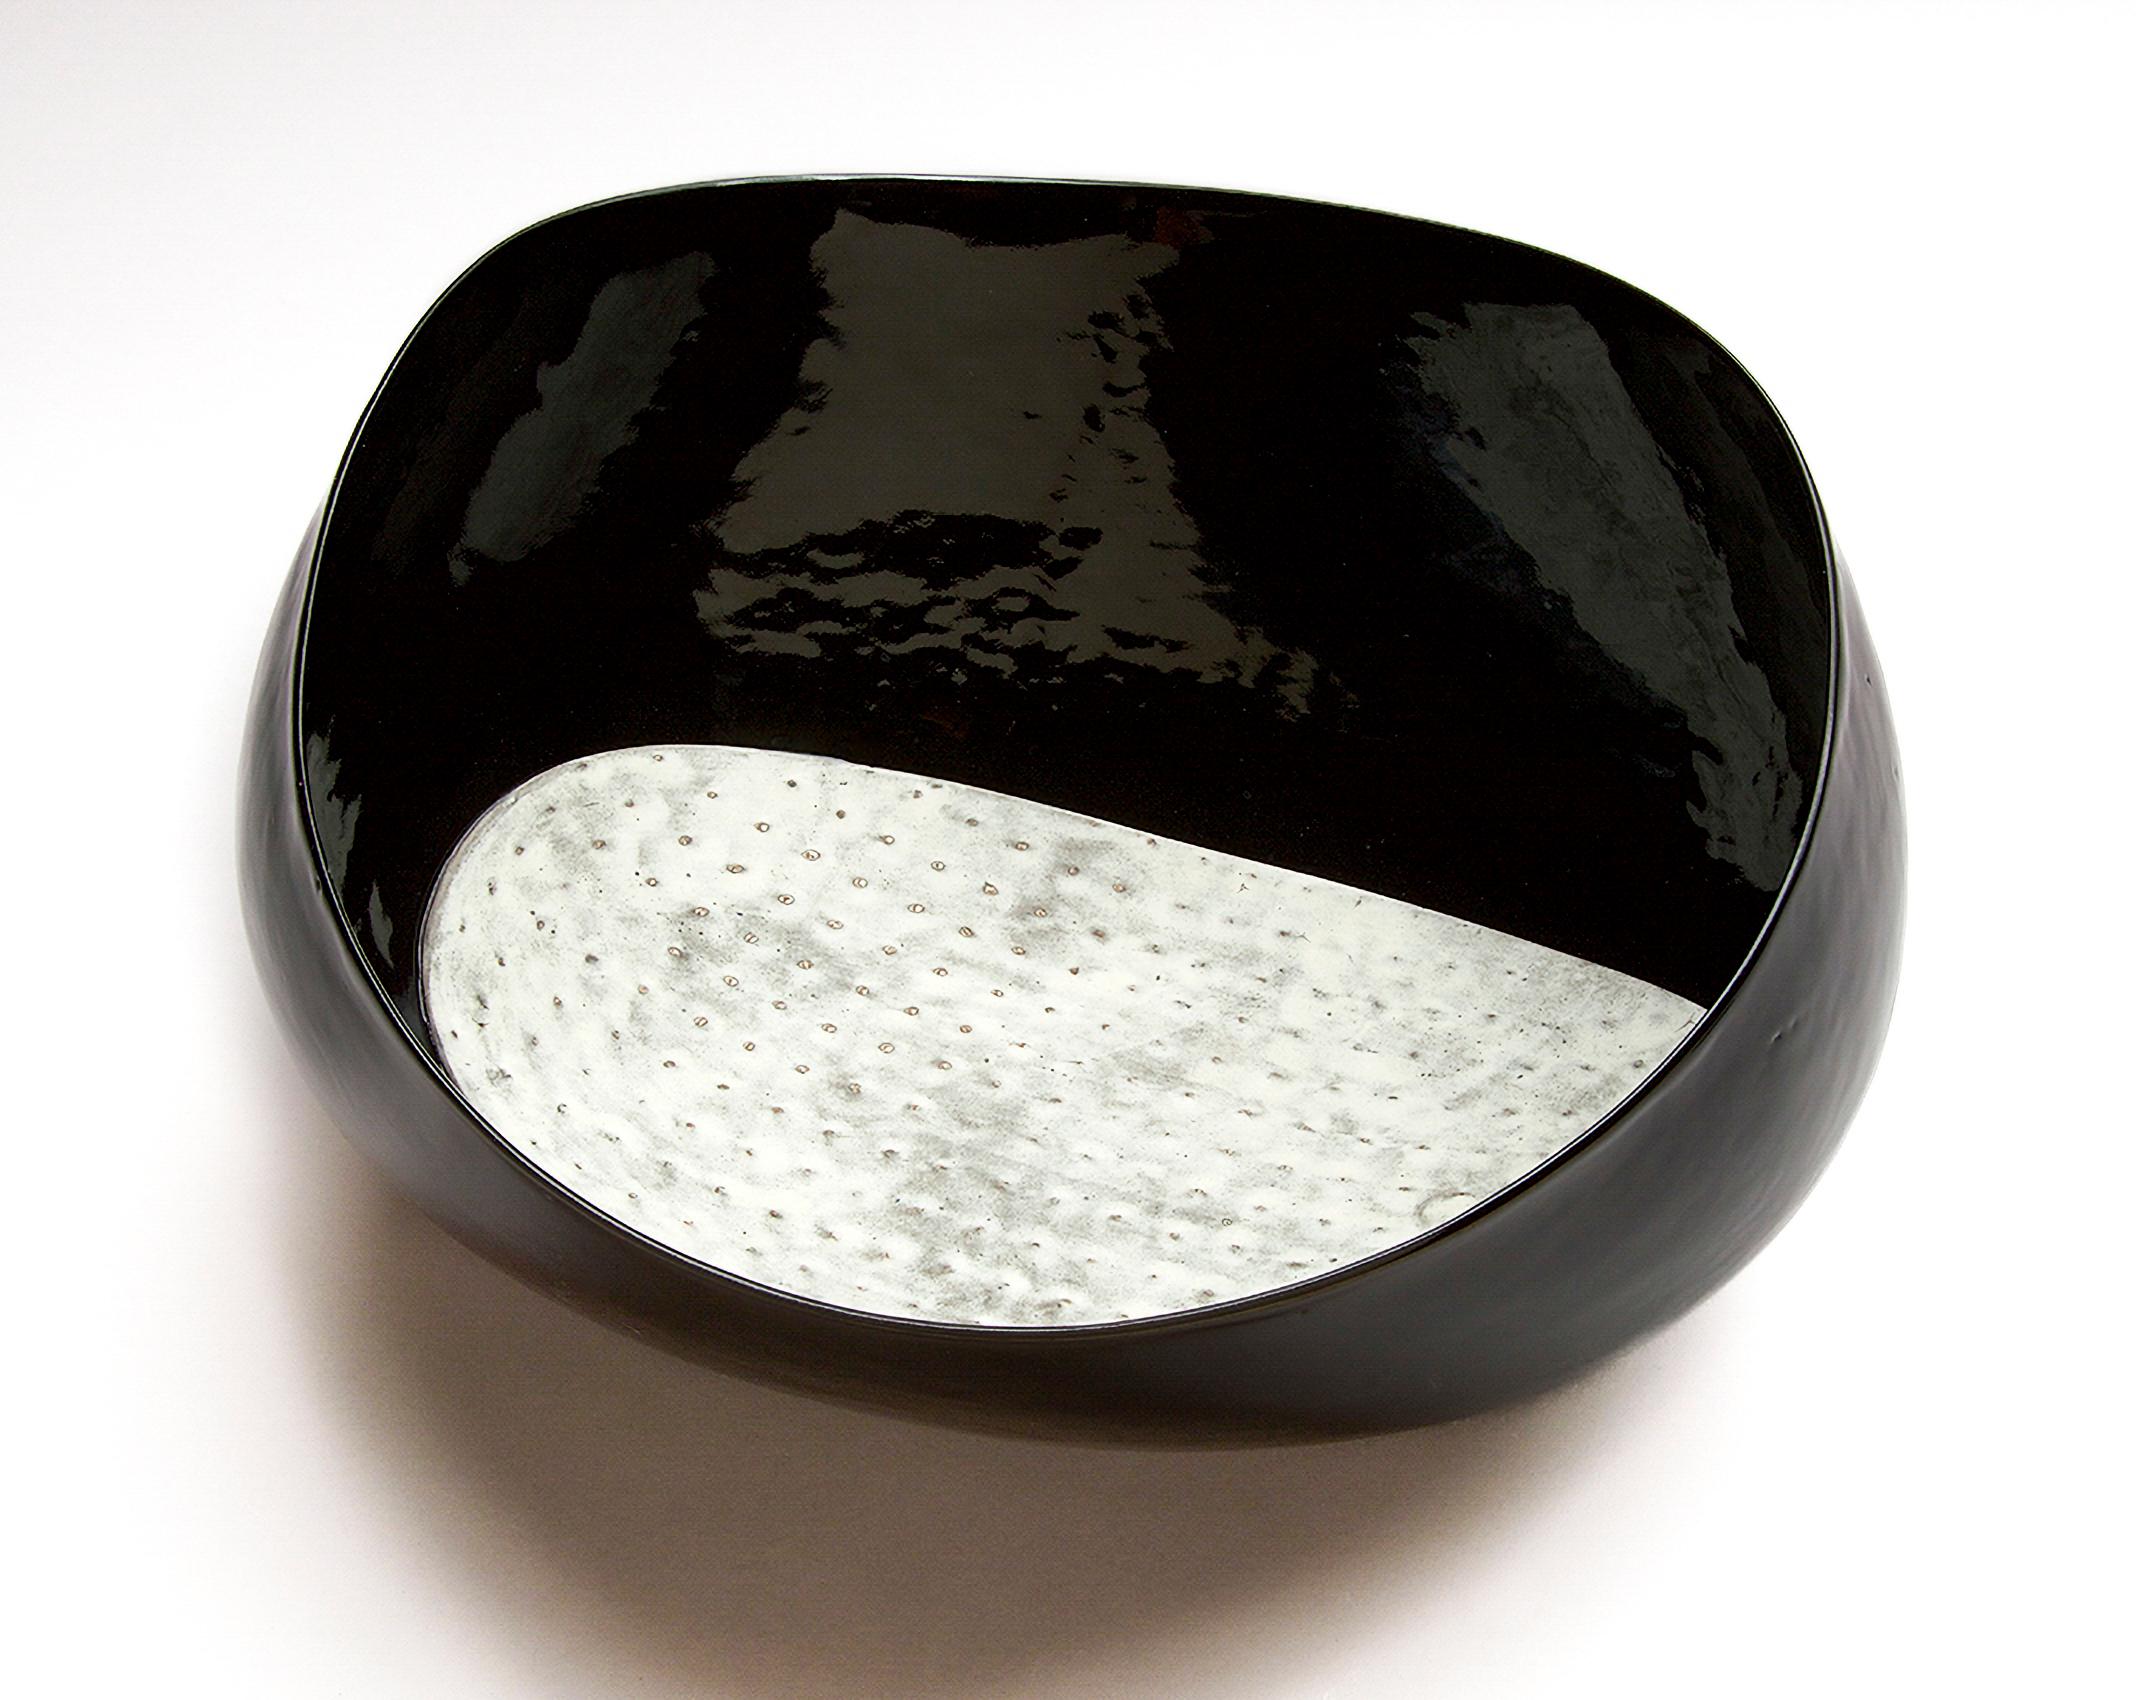 Afterlife No 2  - black & white, nature inspired, elongated, ceramic vessel - Sculpture by Steven Heinemann